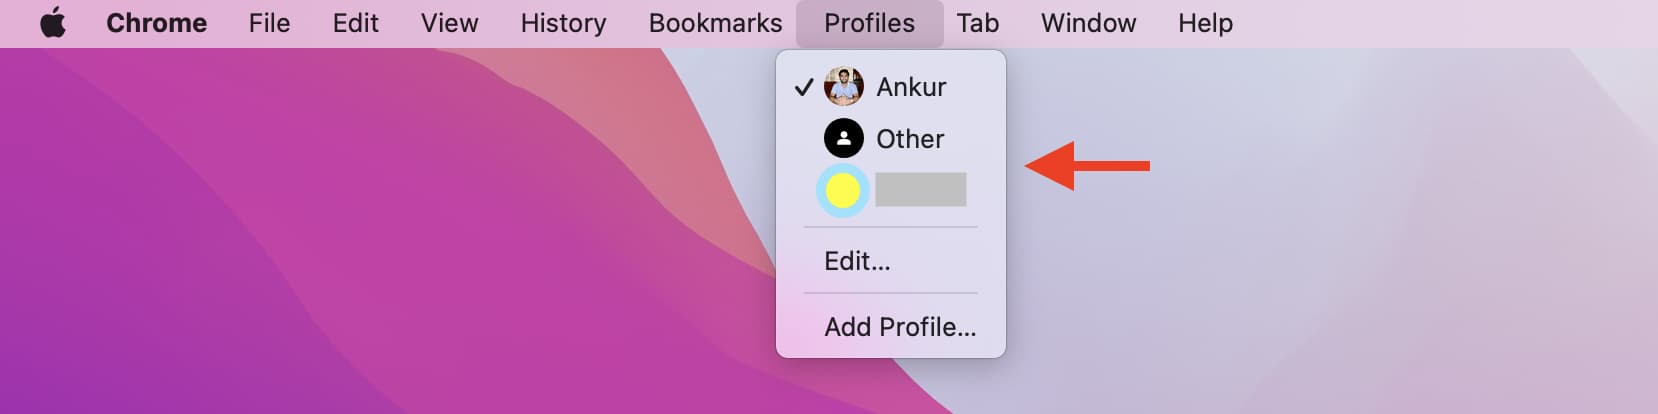 Chrome Profiles on Mac